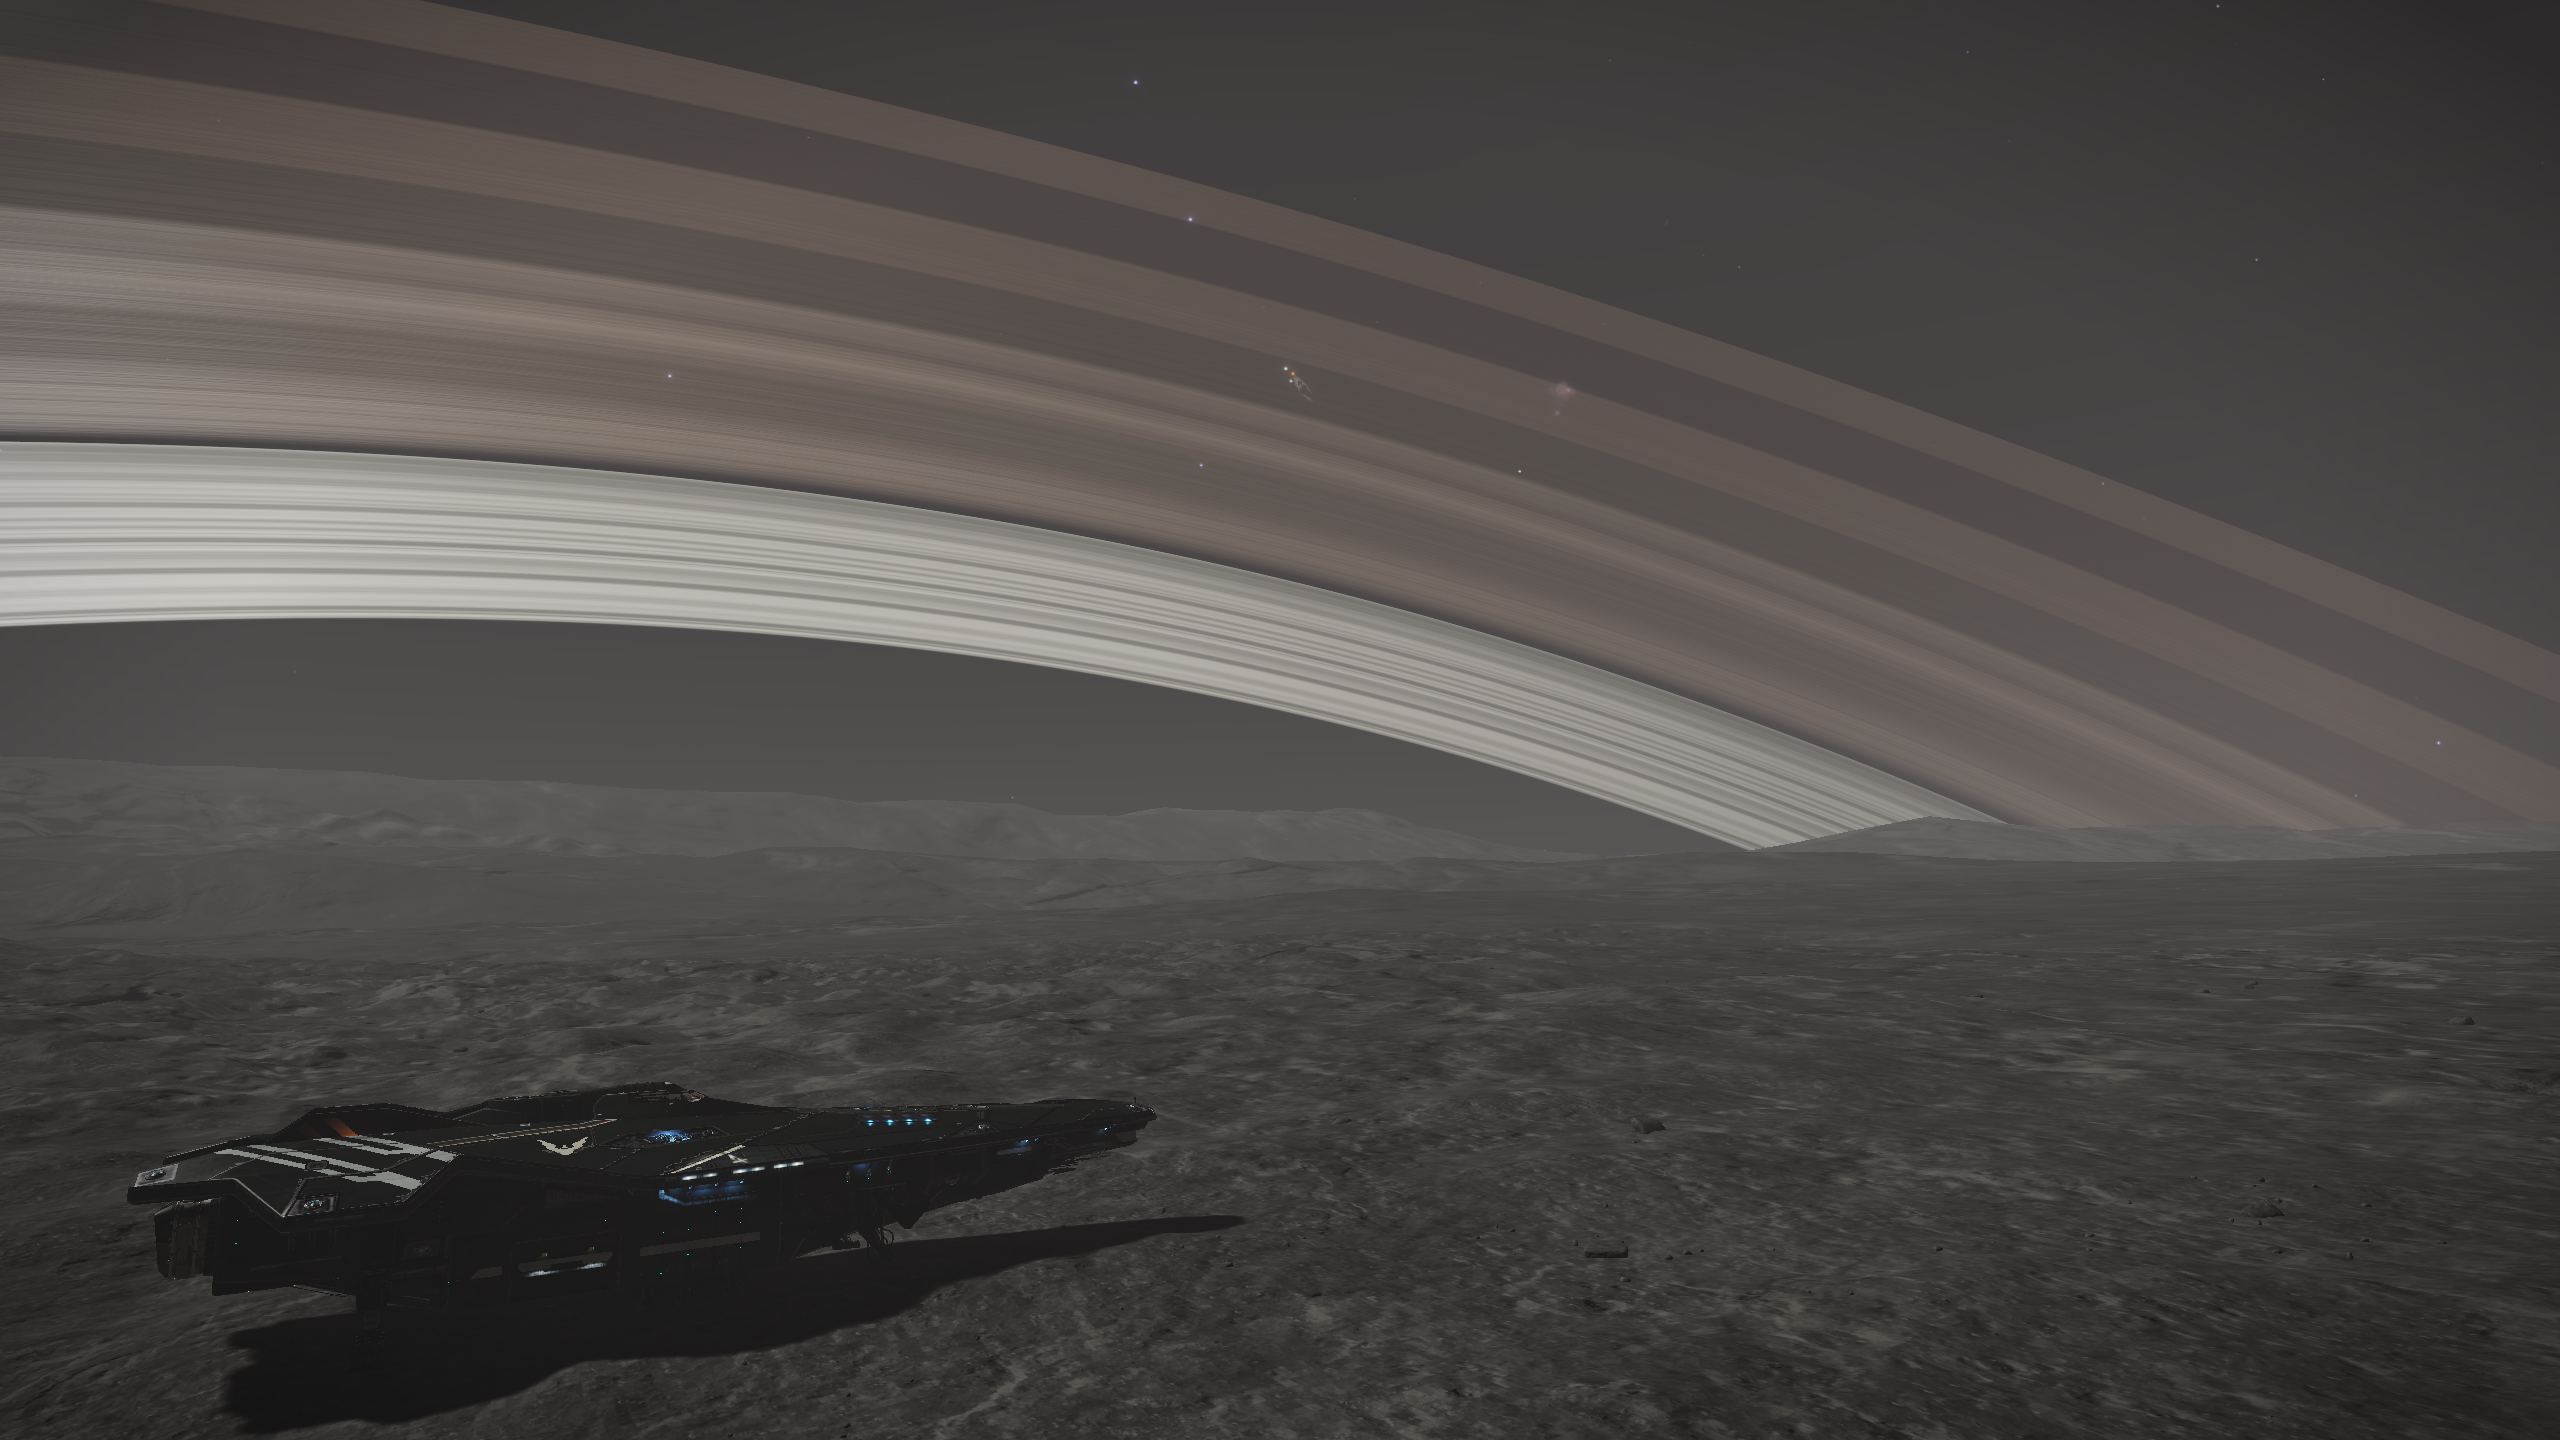 Elite Dangerous Planet Planetary Rings Anaconda Spaceship Spaceship Space Simulator 2560x1440